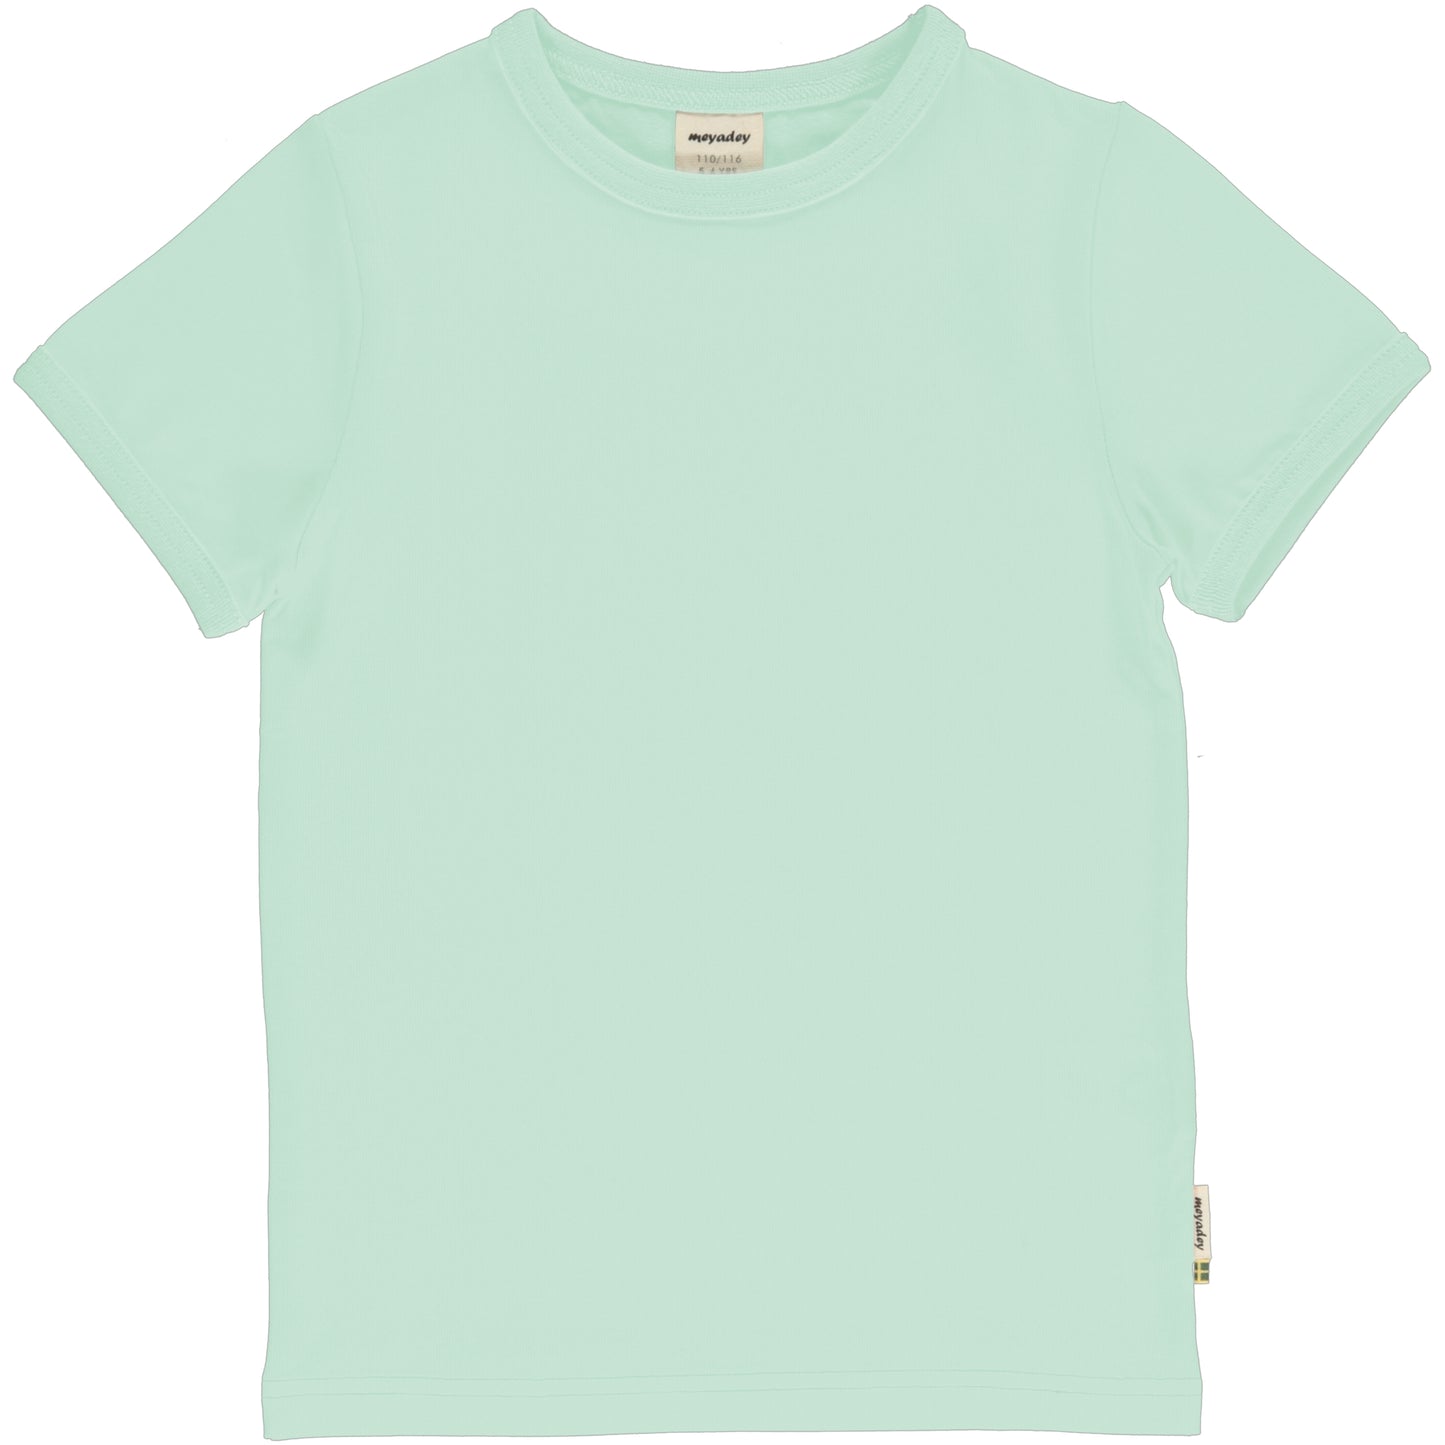 Kinder Basic Shirt für den Sommer babygrün